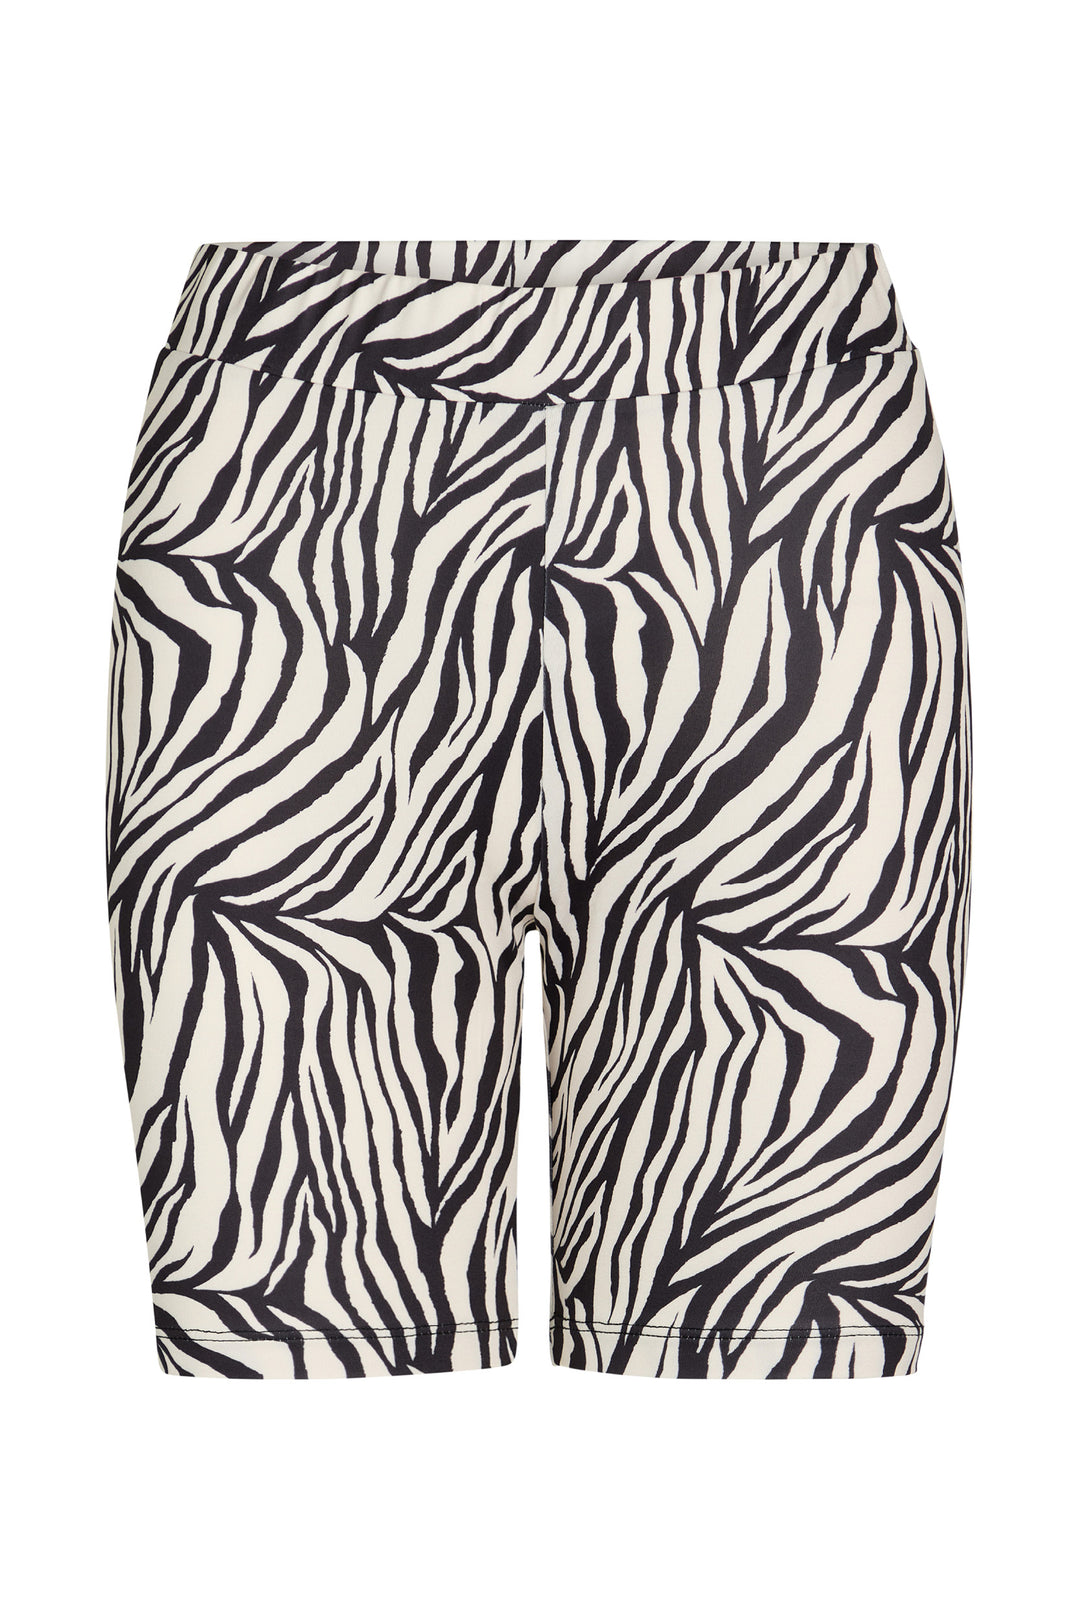 BZR ReginaBZRunna shorts Shorts Zebra print